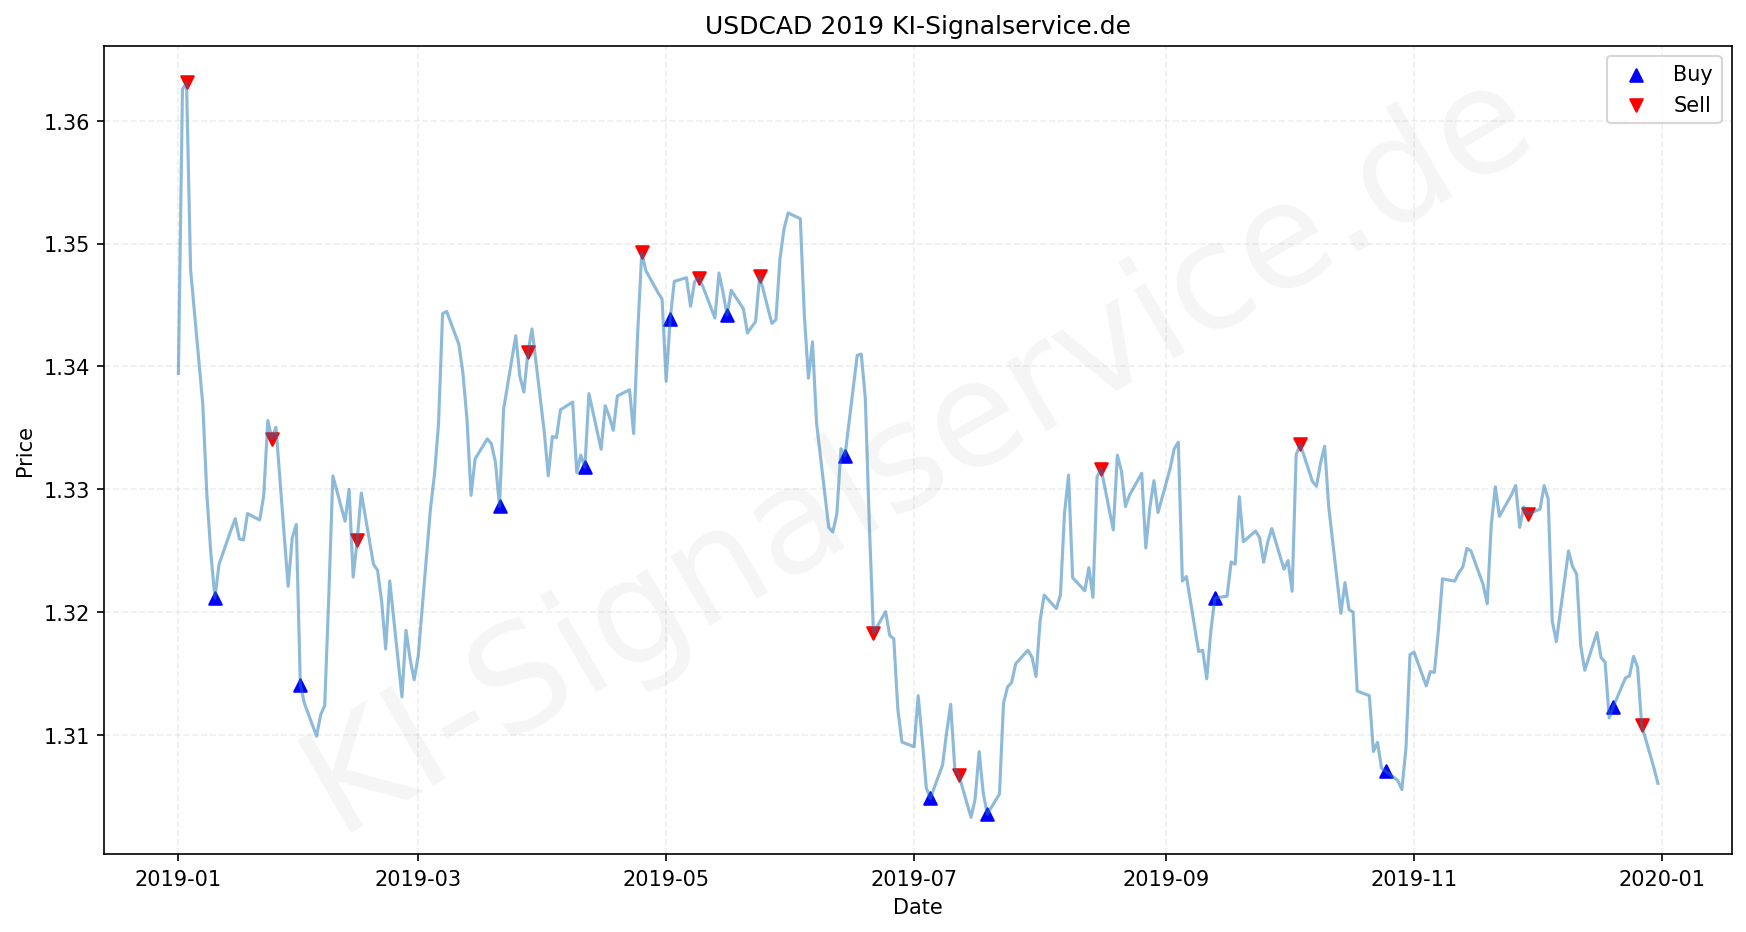 USDCAD Chart - KI Tradingsignale 2019